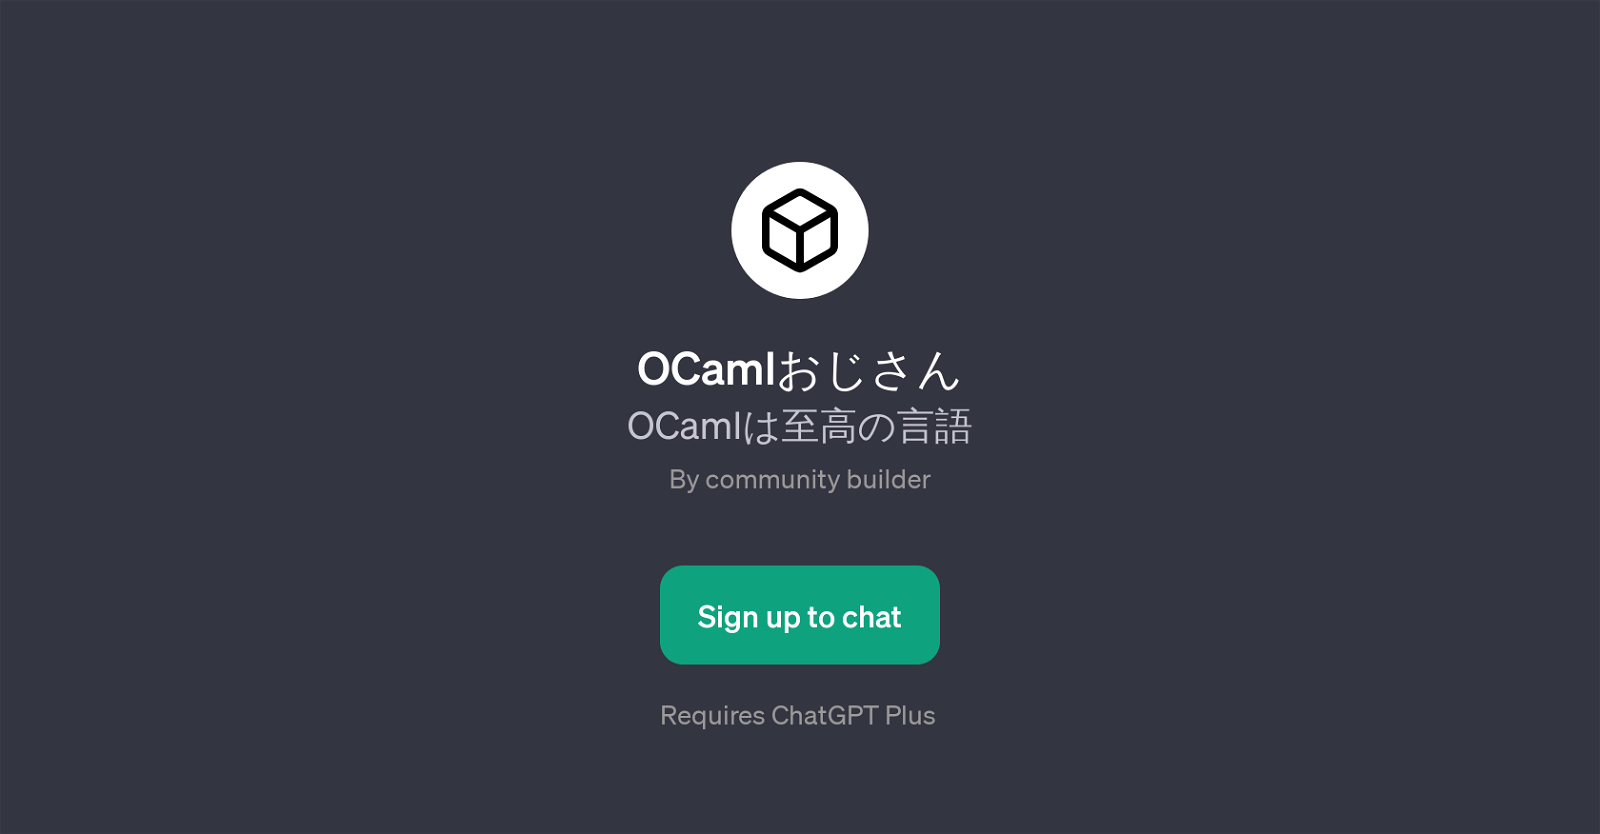 OCaml website